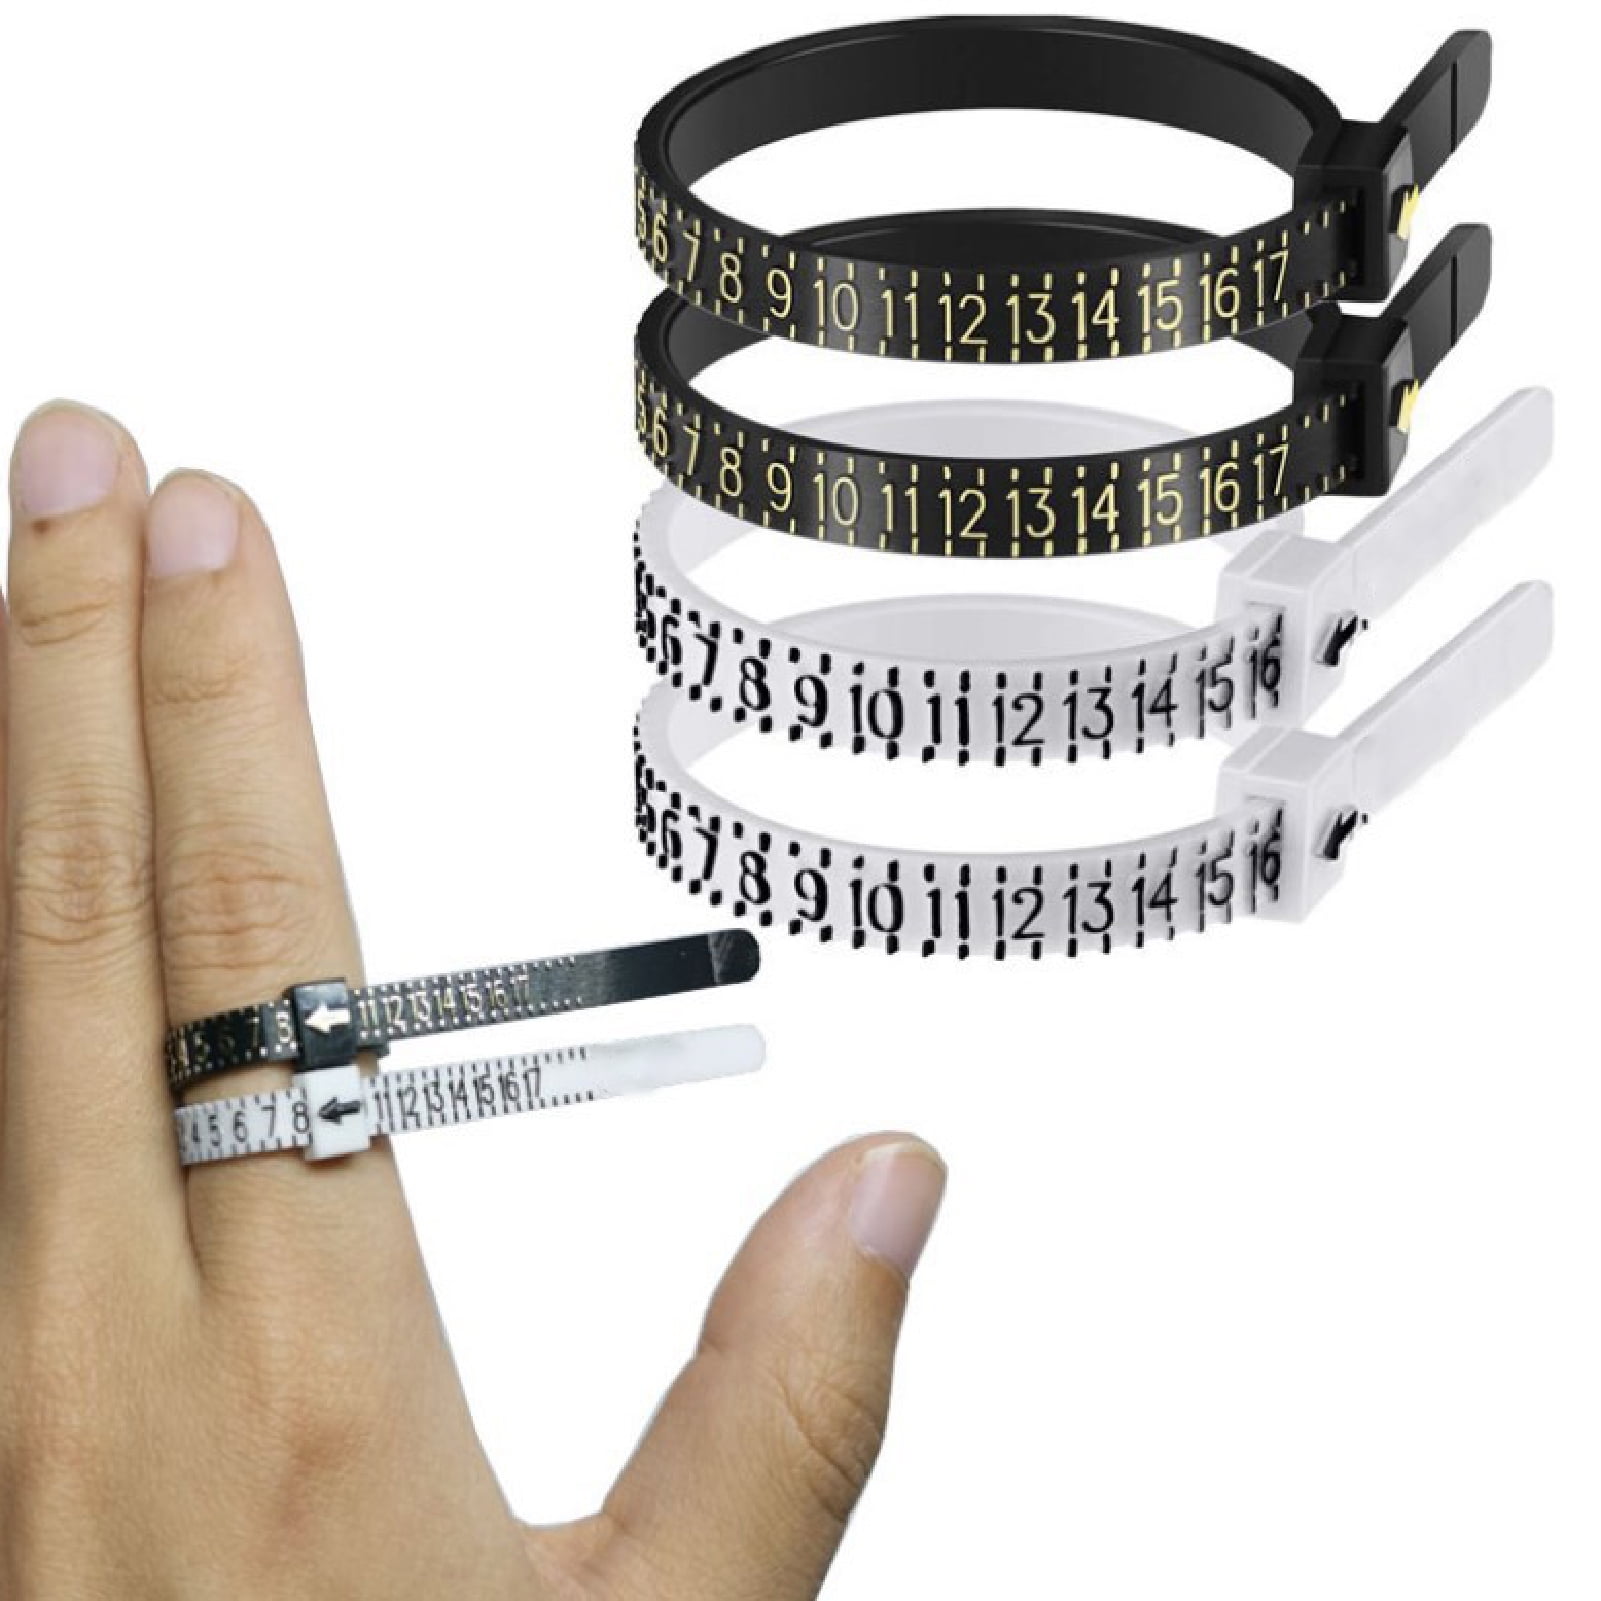  Hetirengong Jewelry Tool New US UK Plastic Standard Finger Ring  Gauge Sizer Stick Measurement Test Measure Tool Finger Sizing Loop Ring  Tools 0-13 US Size A-Z UK Size : Arts, Crafts